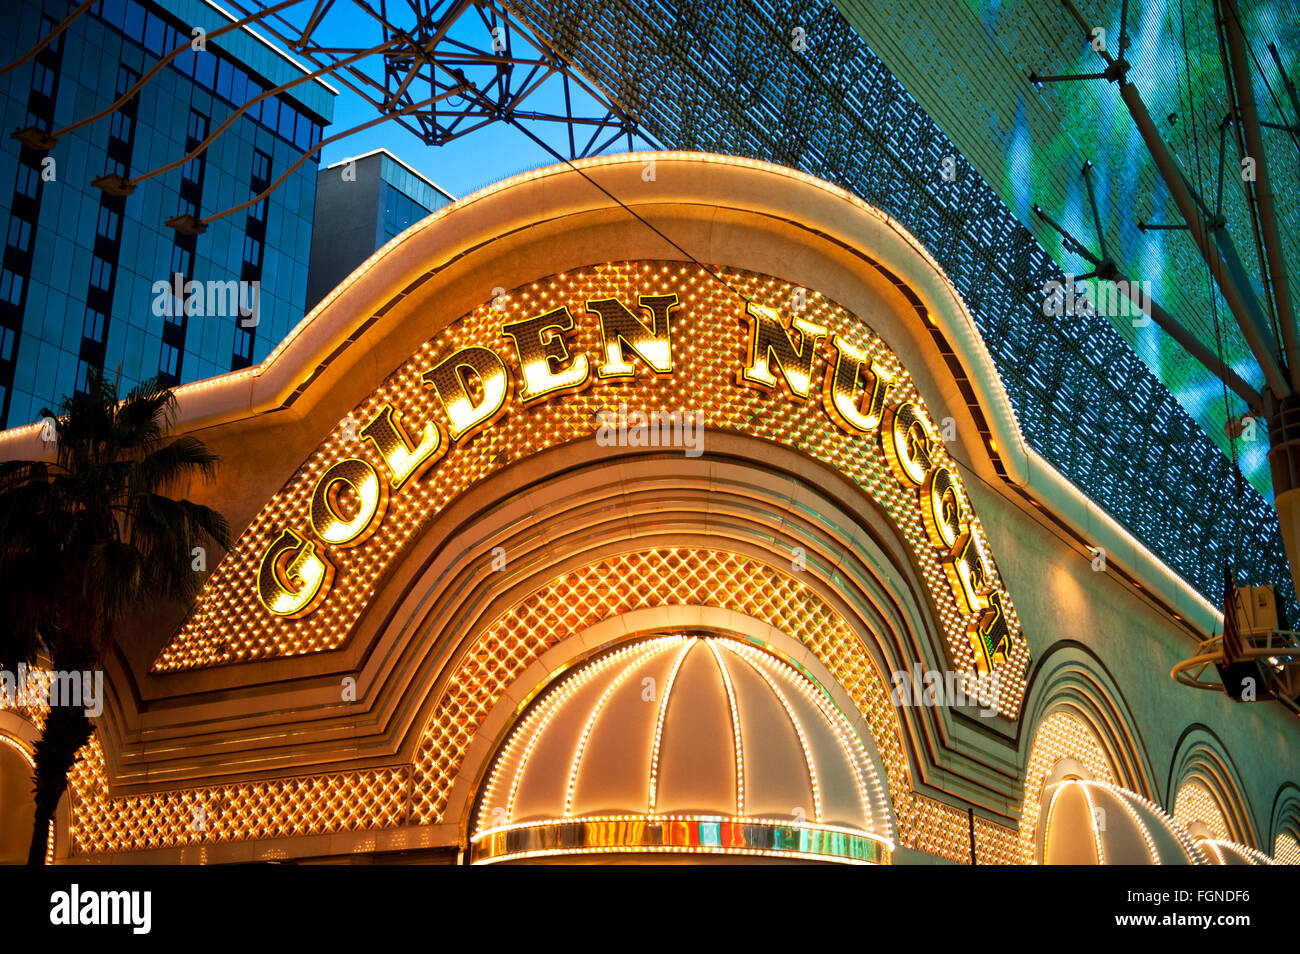 Das Golden Nugget Casino, Fremont Street, Las Vegas 'Fremont Street Experience'., Stockfoto